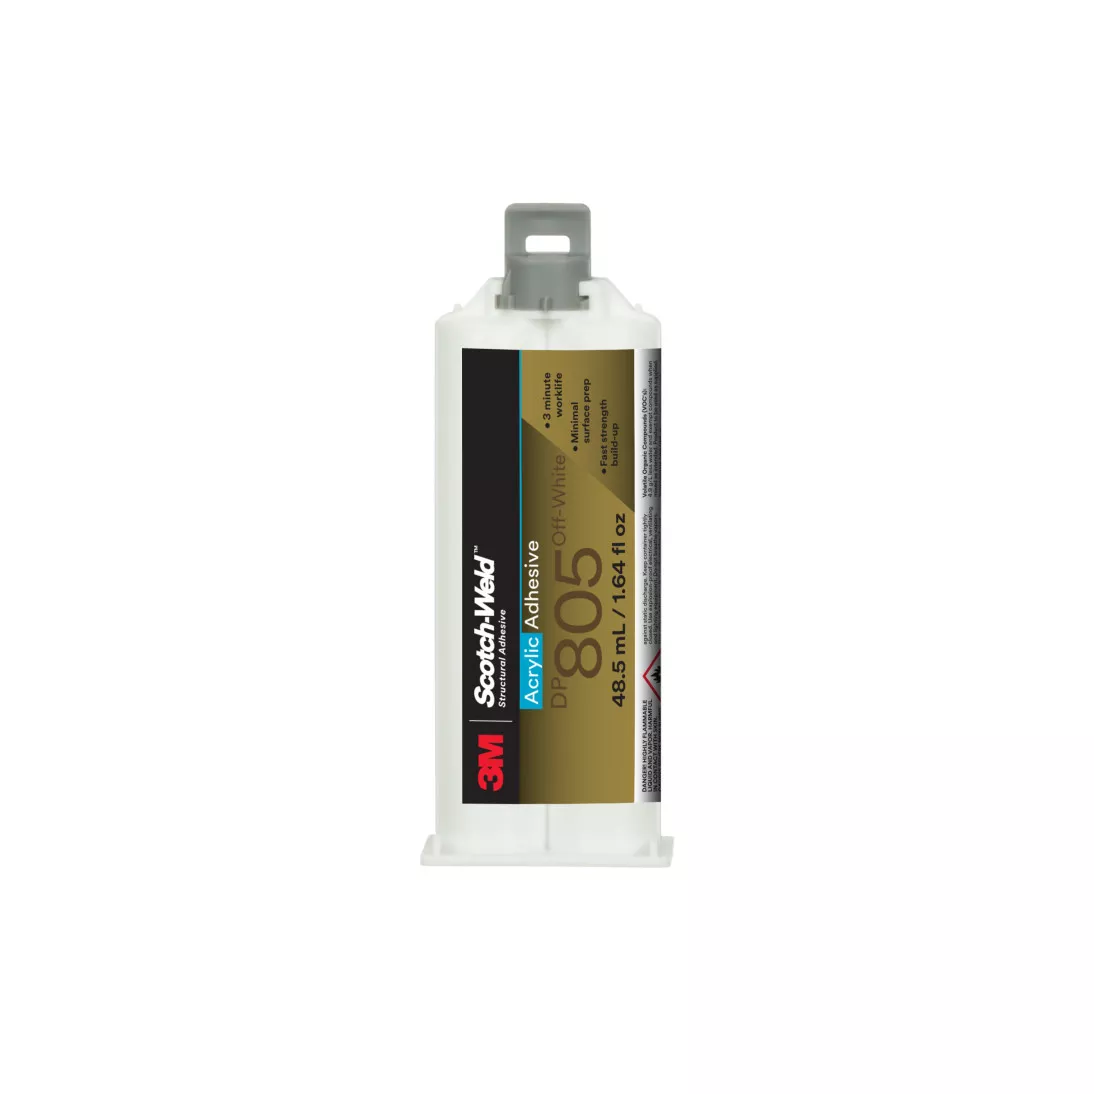 3M™ Scotch-Weld™ Acrylic Adhesive DP805, Off-White, 48.5 mL Duo-Pak,
12/case